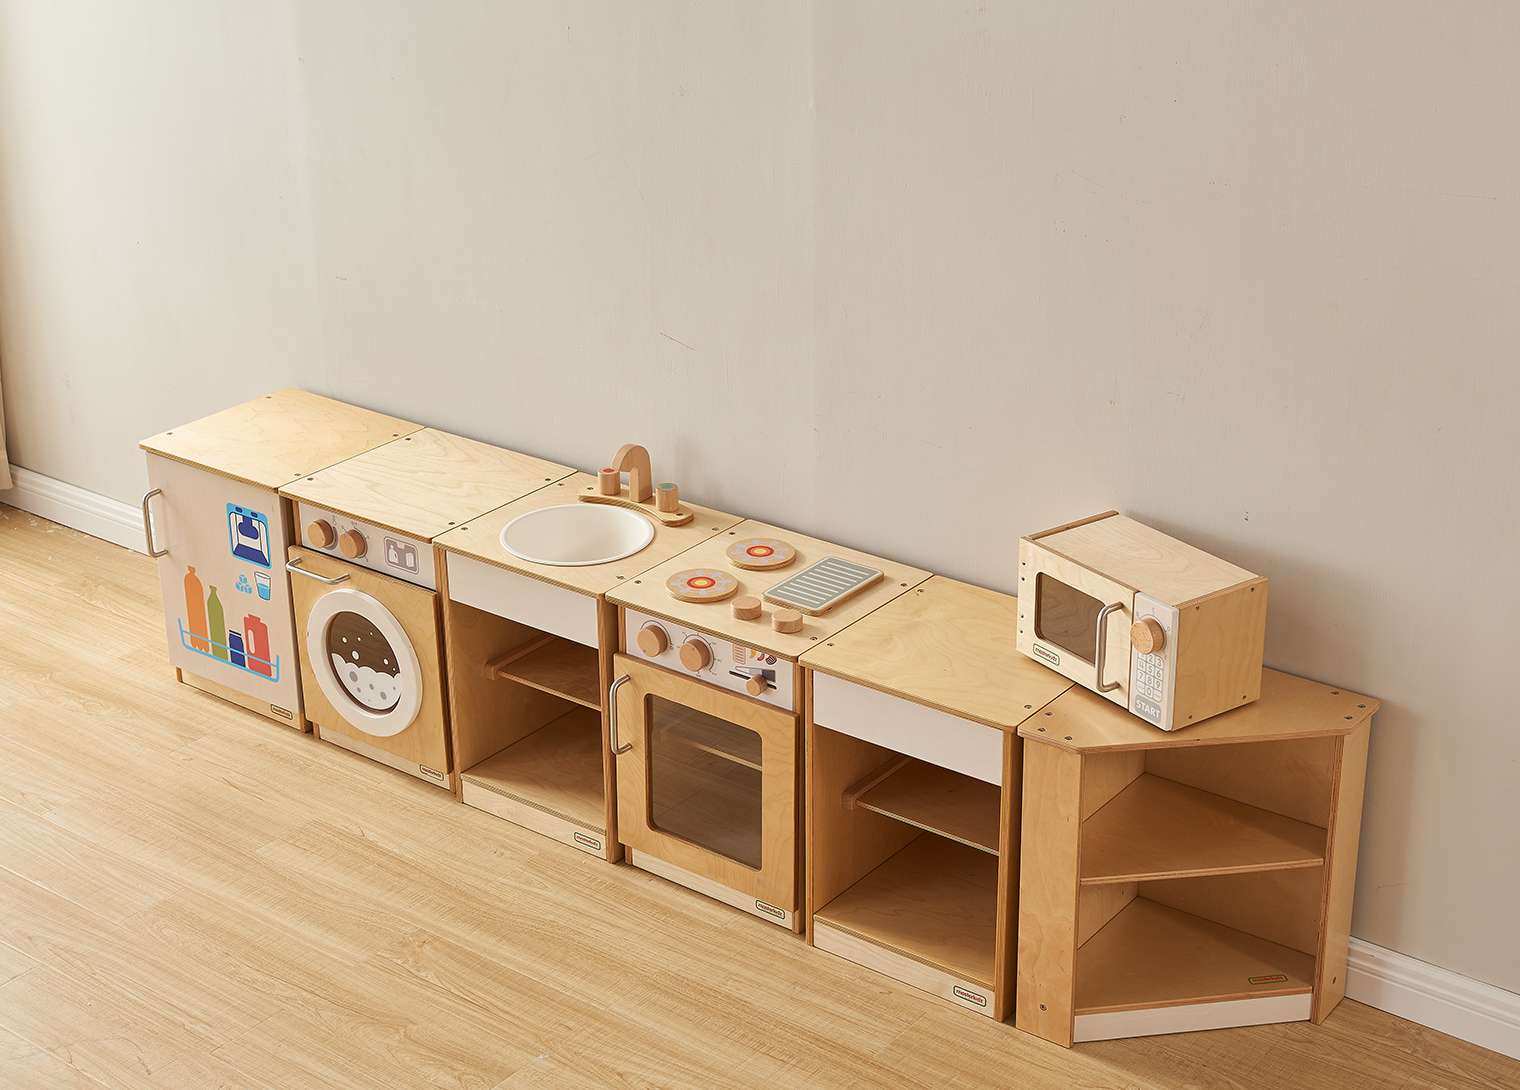 OSLO Kitchen Range - Cupboard Unit